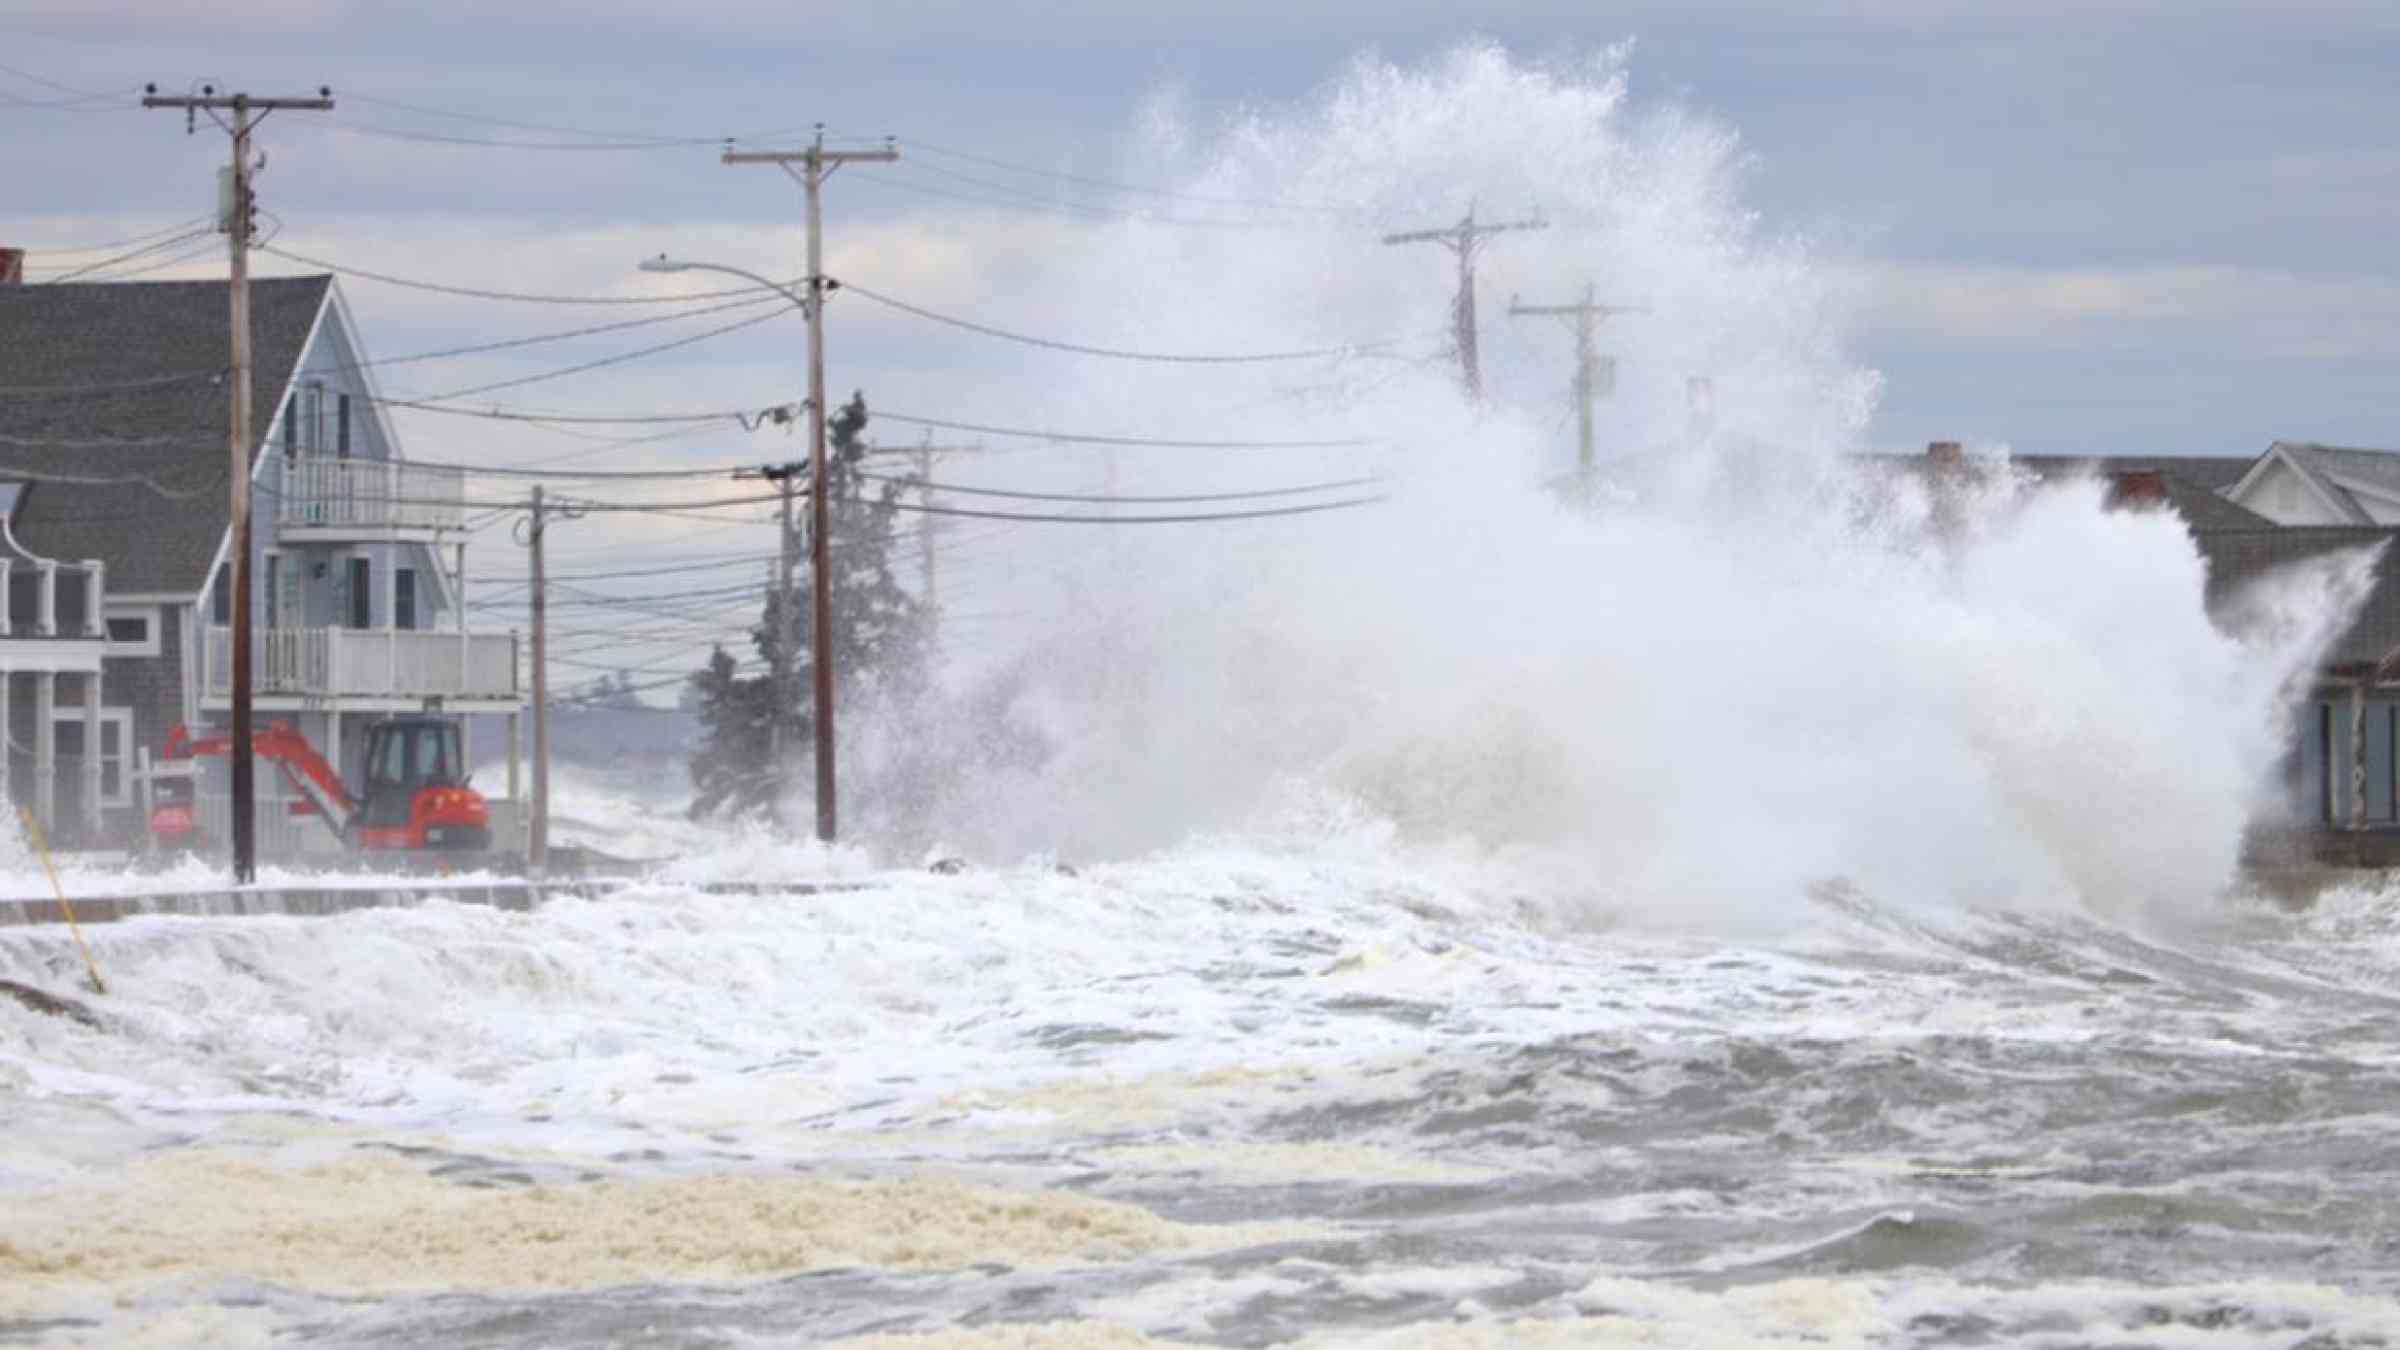 Storm surge in Maine, USA (2018). Arthur Villator/Shutterstock